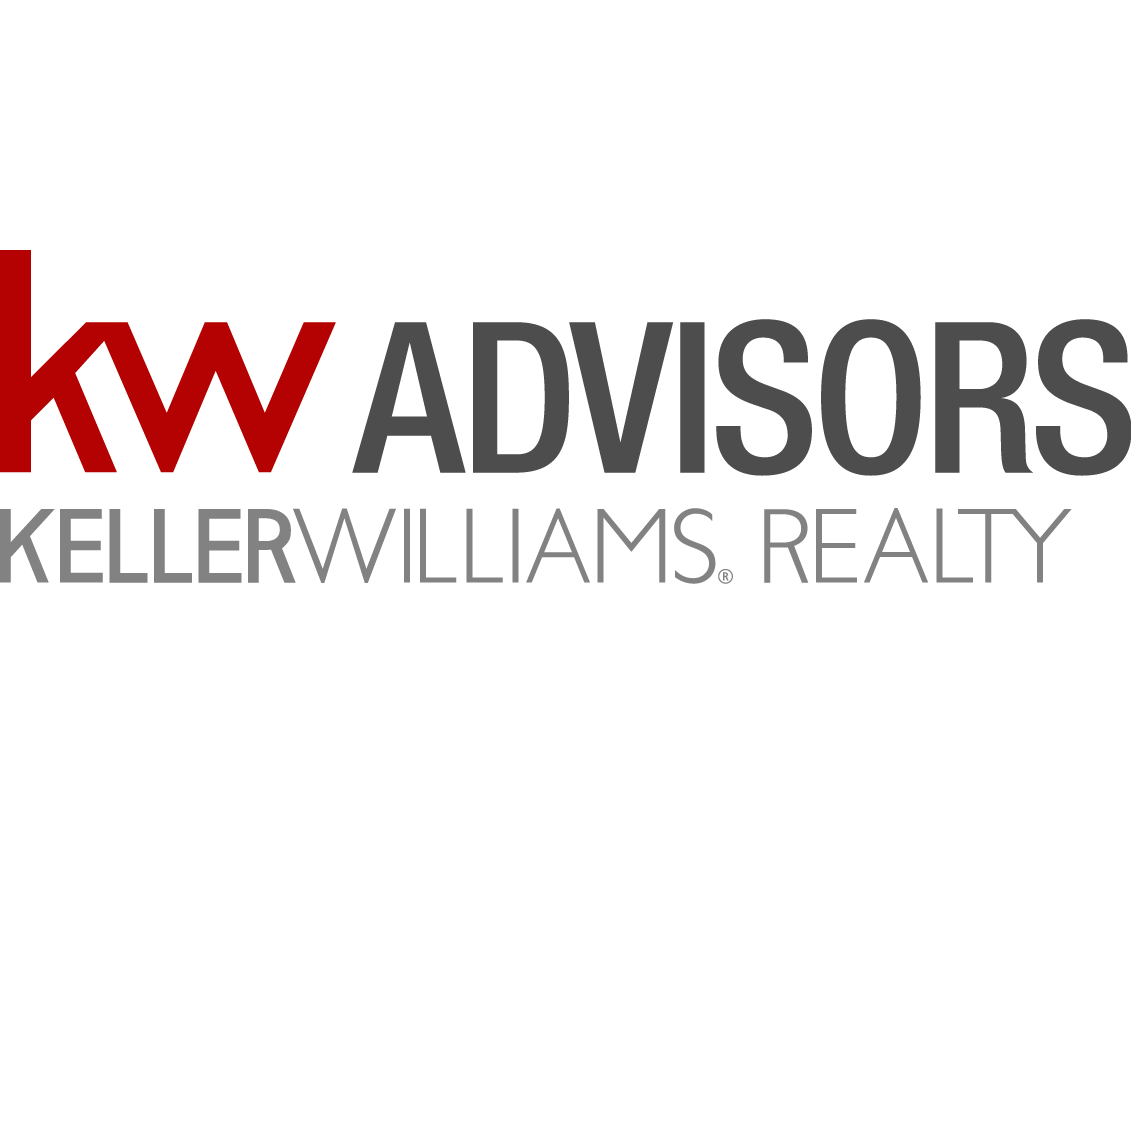 Keller Williams Realty Logo - Cincinnati Real Estate - Cincinnati Homes for Sale 513.766.9200